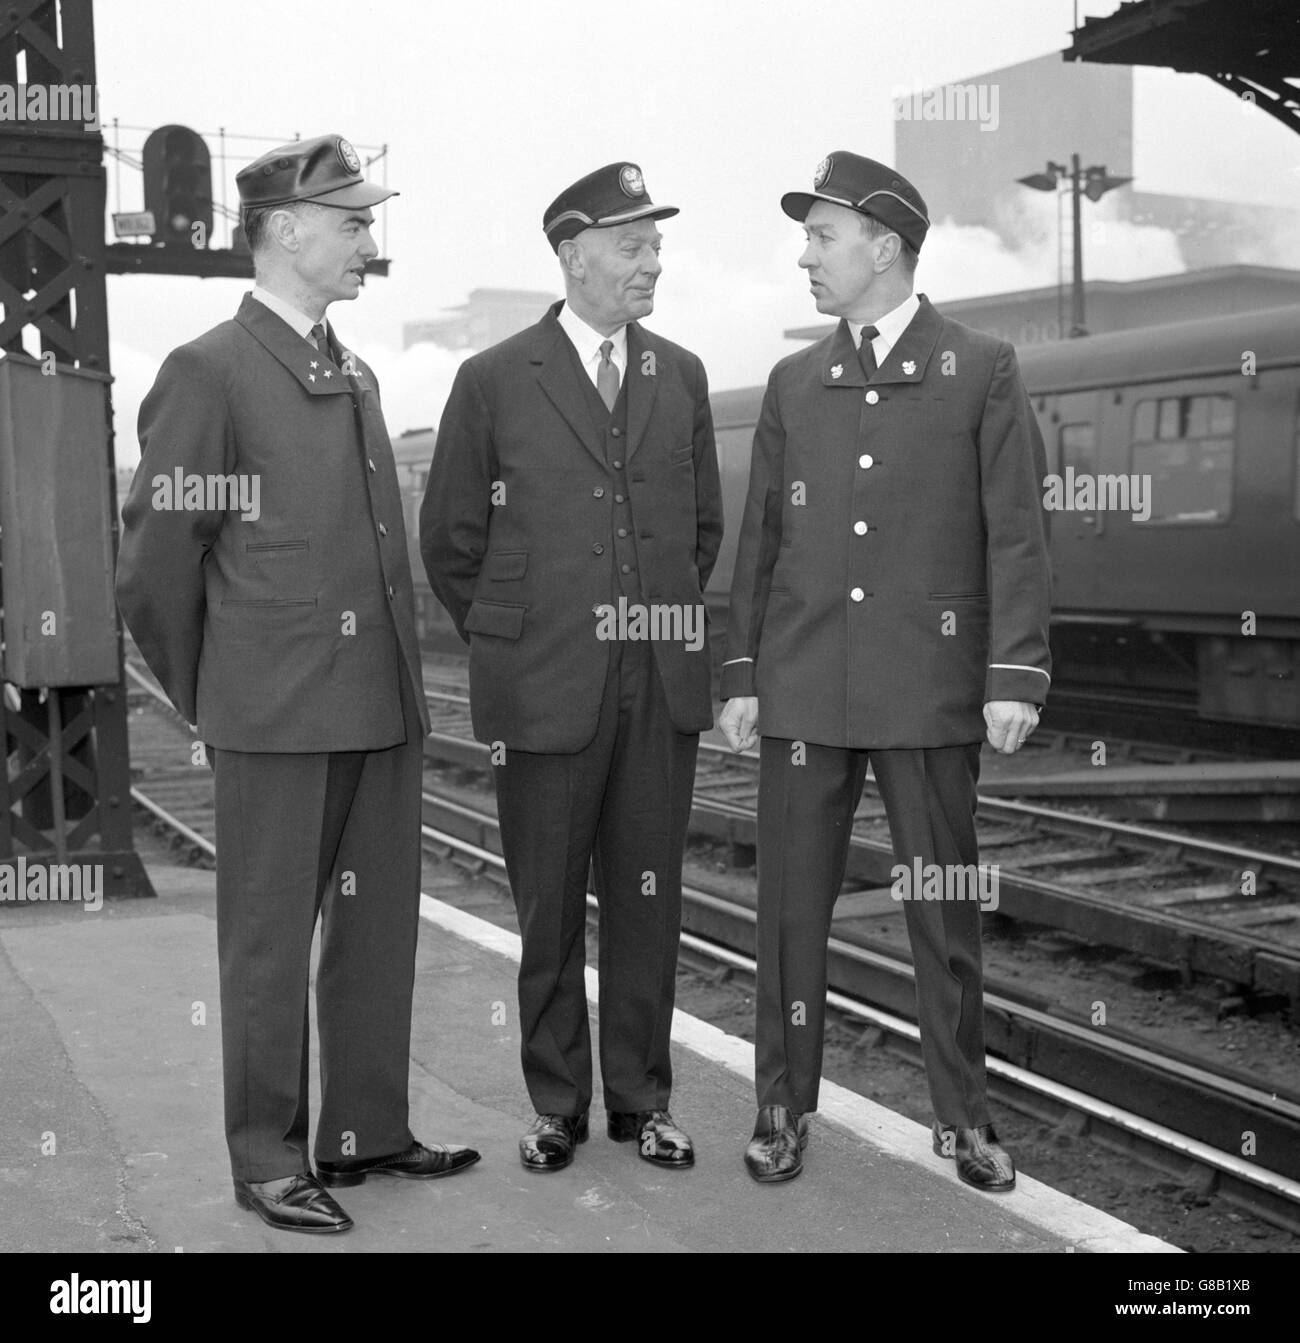 Transport - British Rail Uniforms Stock Photo